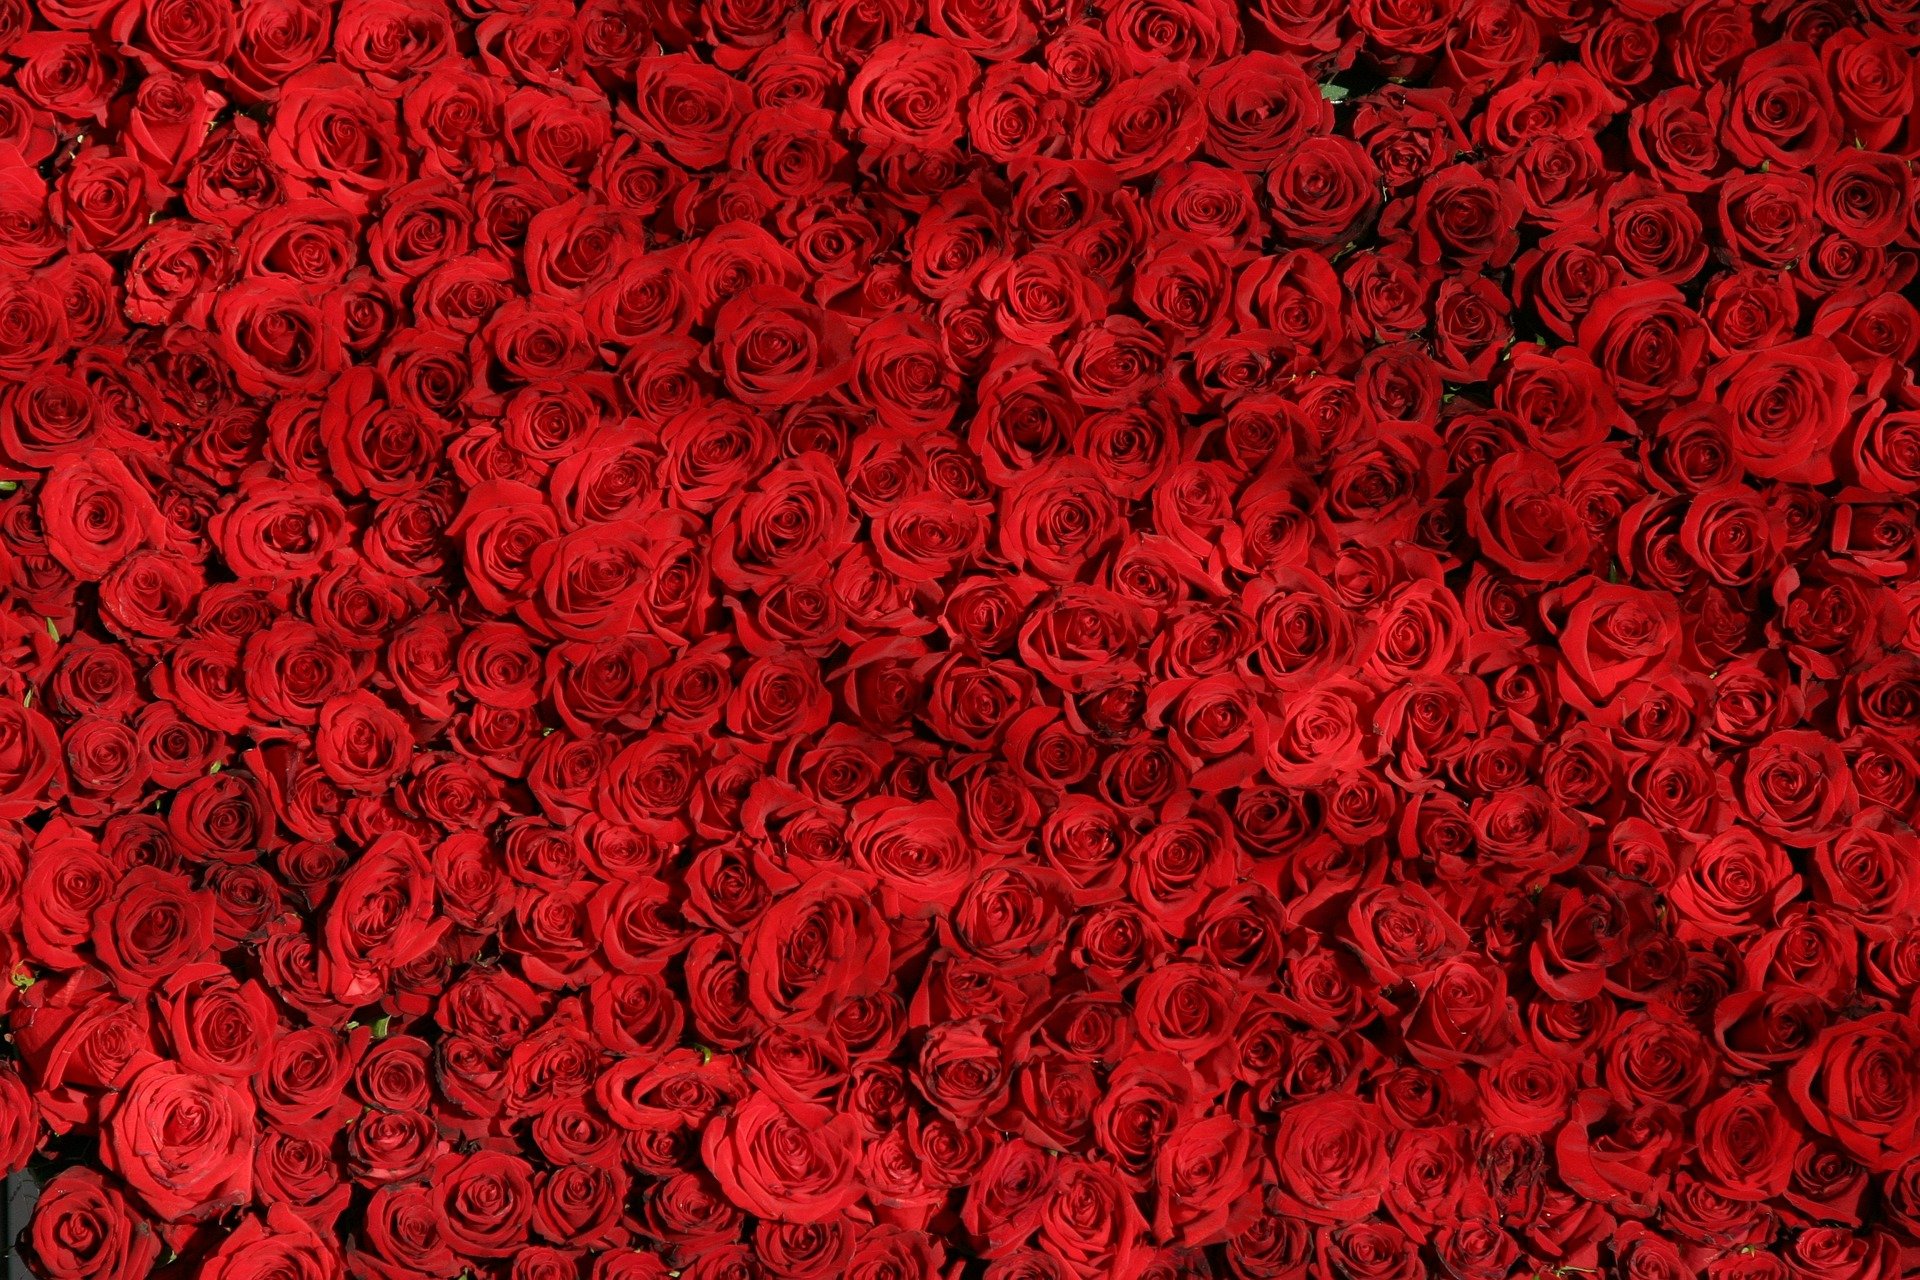 Gift Your Sweetheart a Sweetheart Rose Garden from Heinen